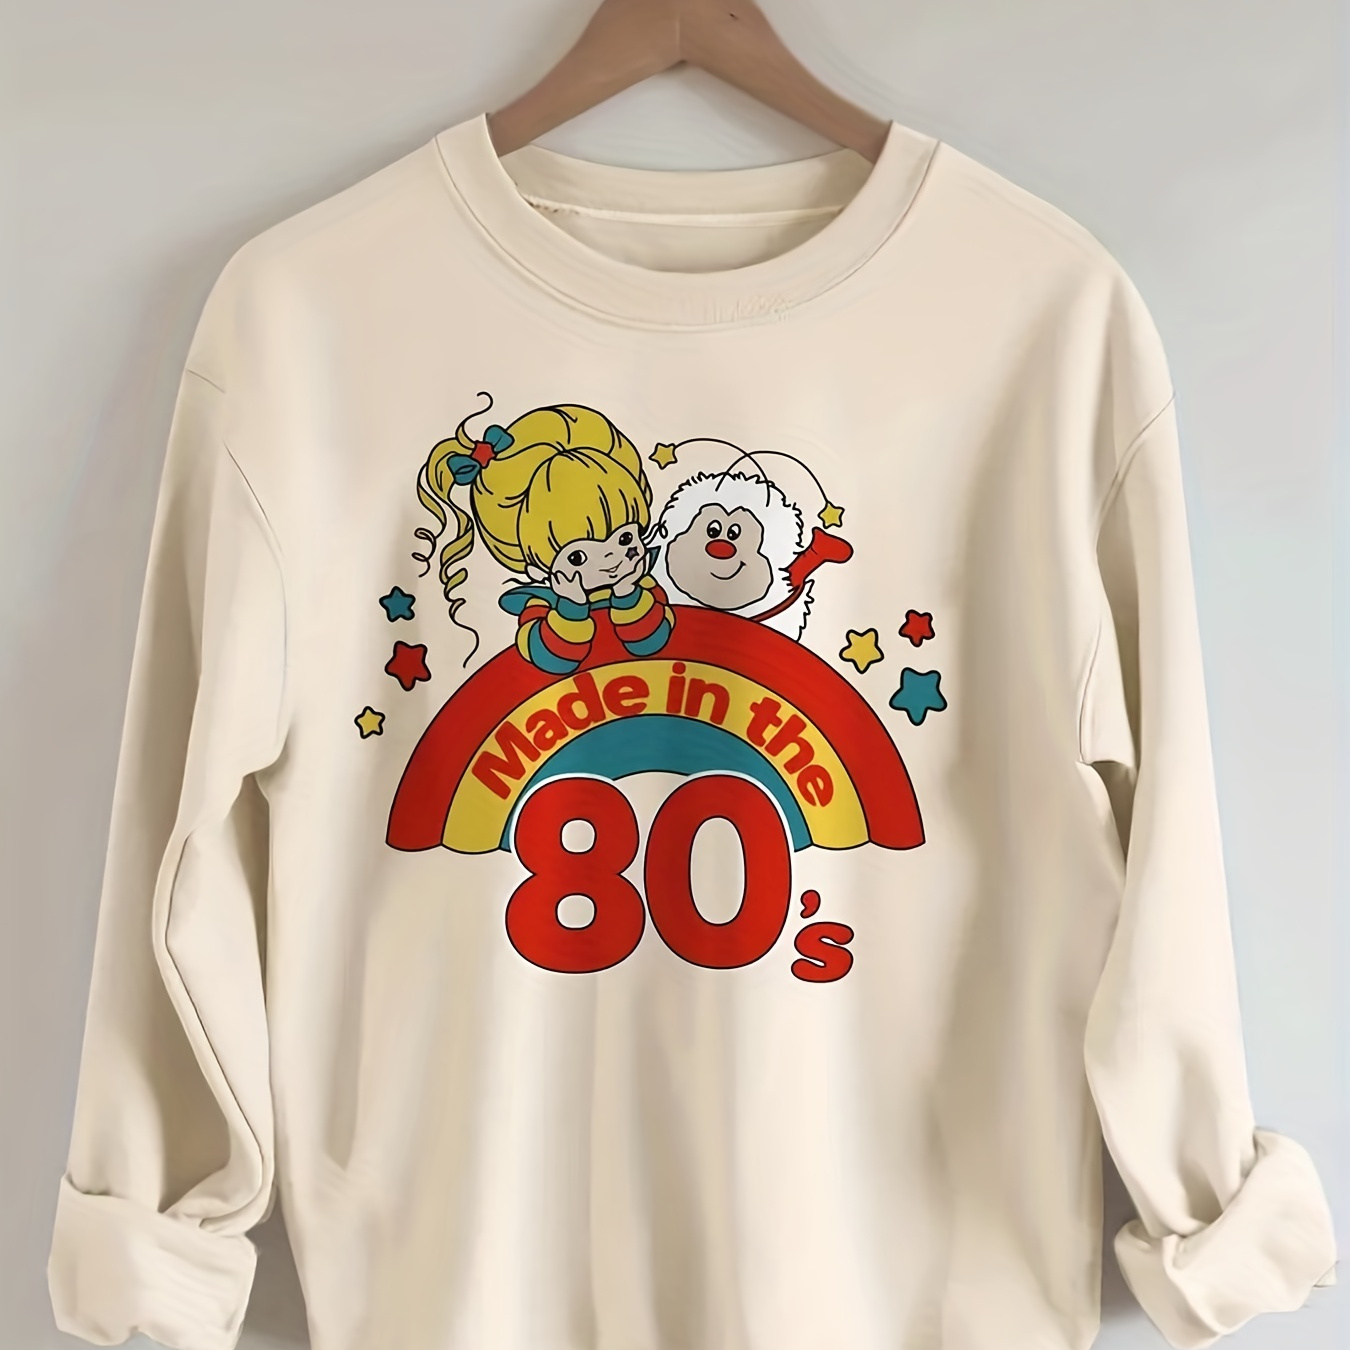 

Made In The 80s Cartoon Print Sweatshirt, Long Sleeve Crew Neck Casual Sweatshirt For Spring & Fall, Women's Clothing